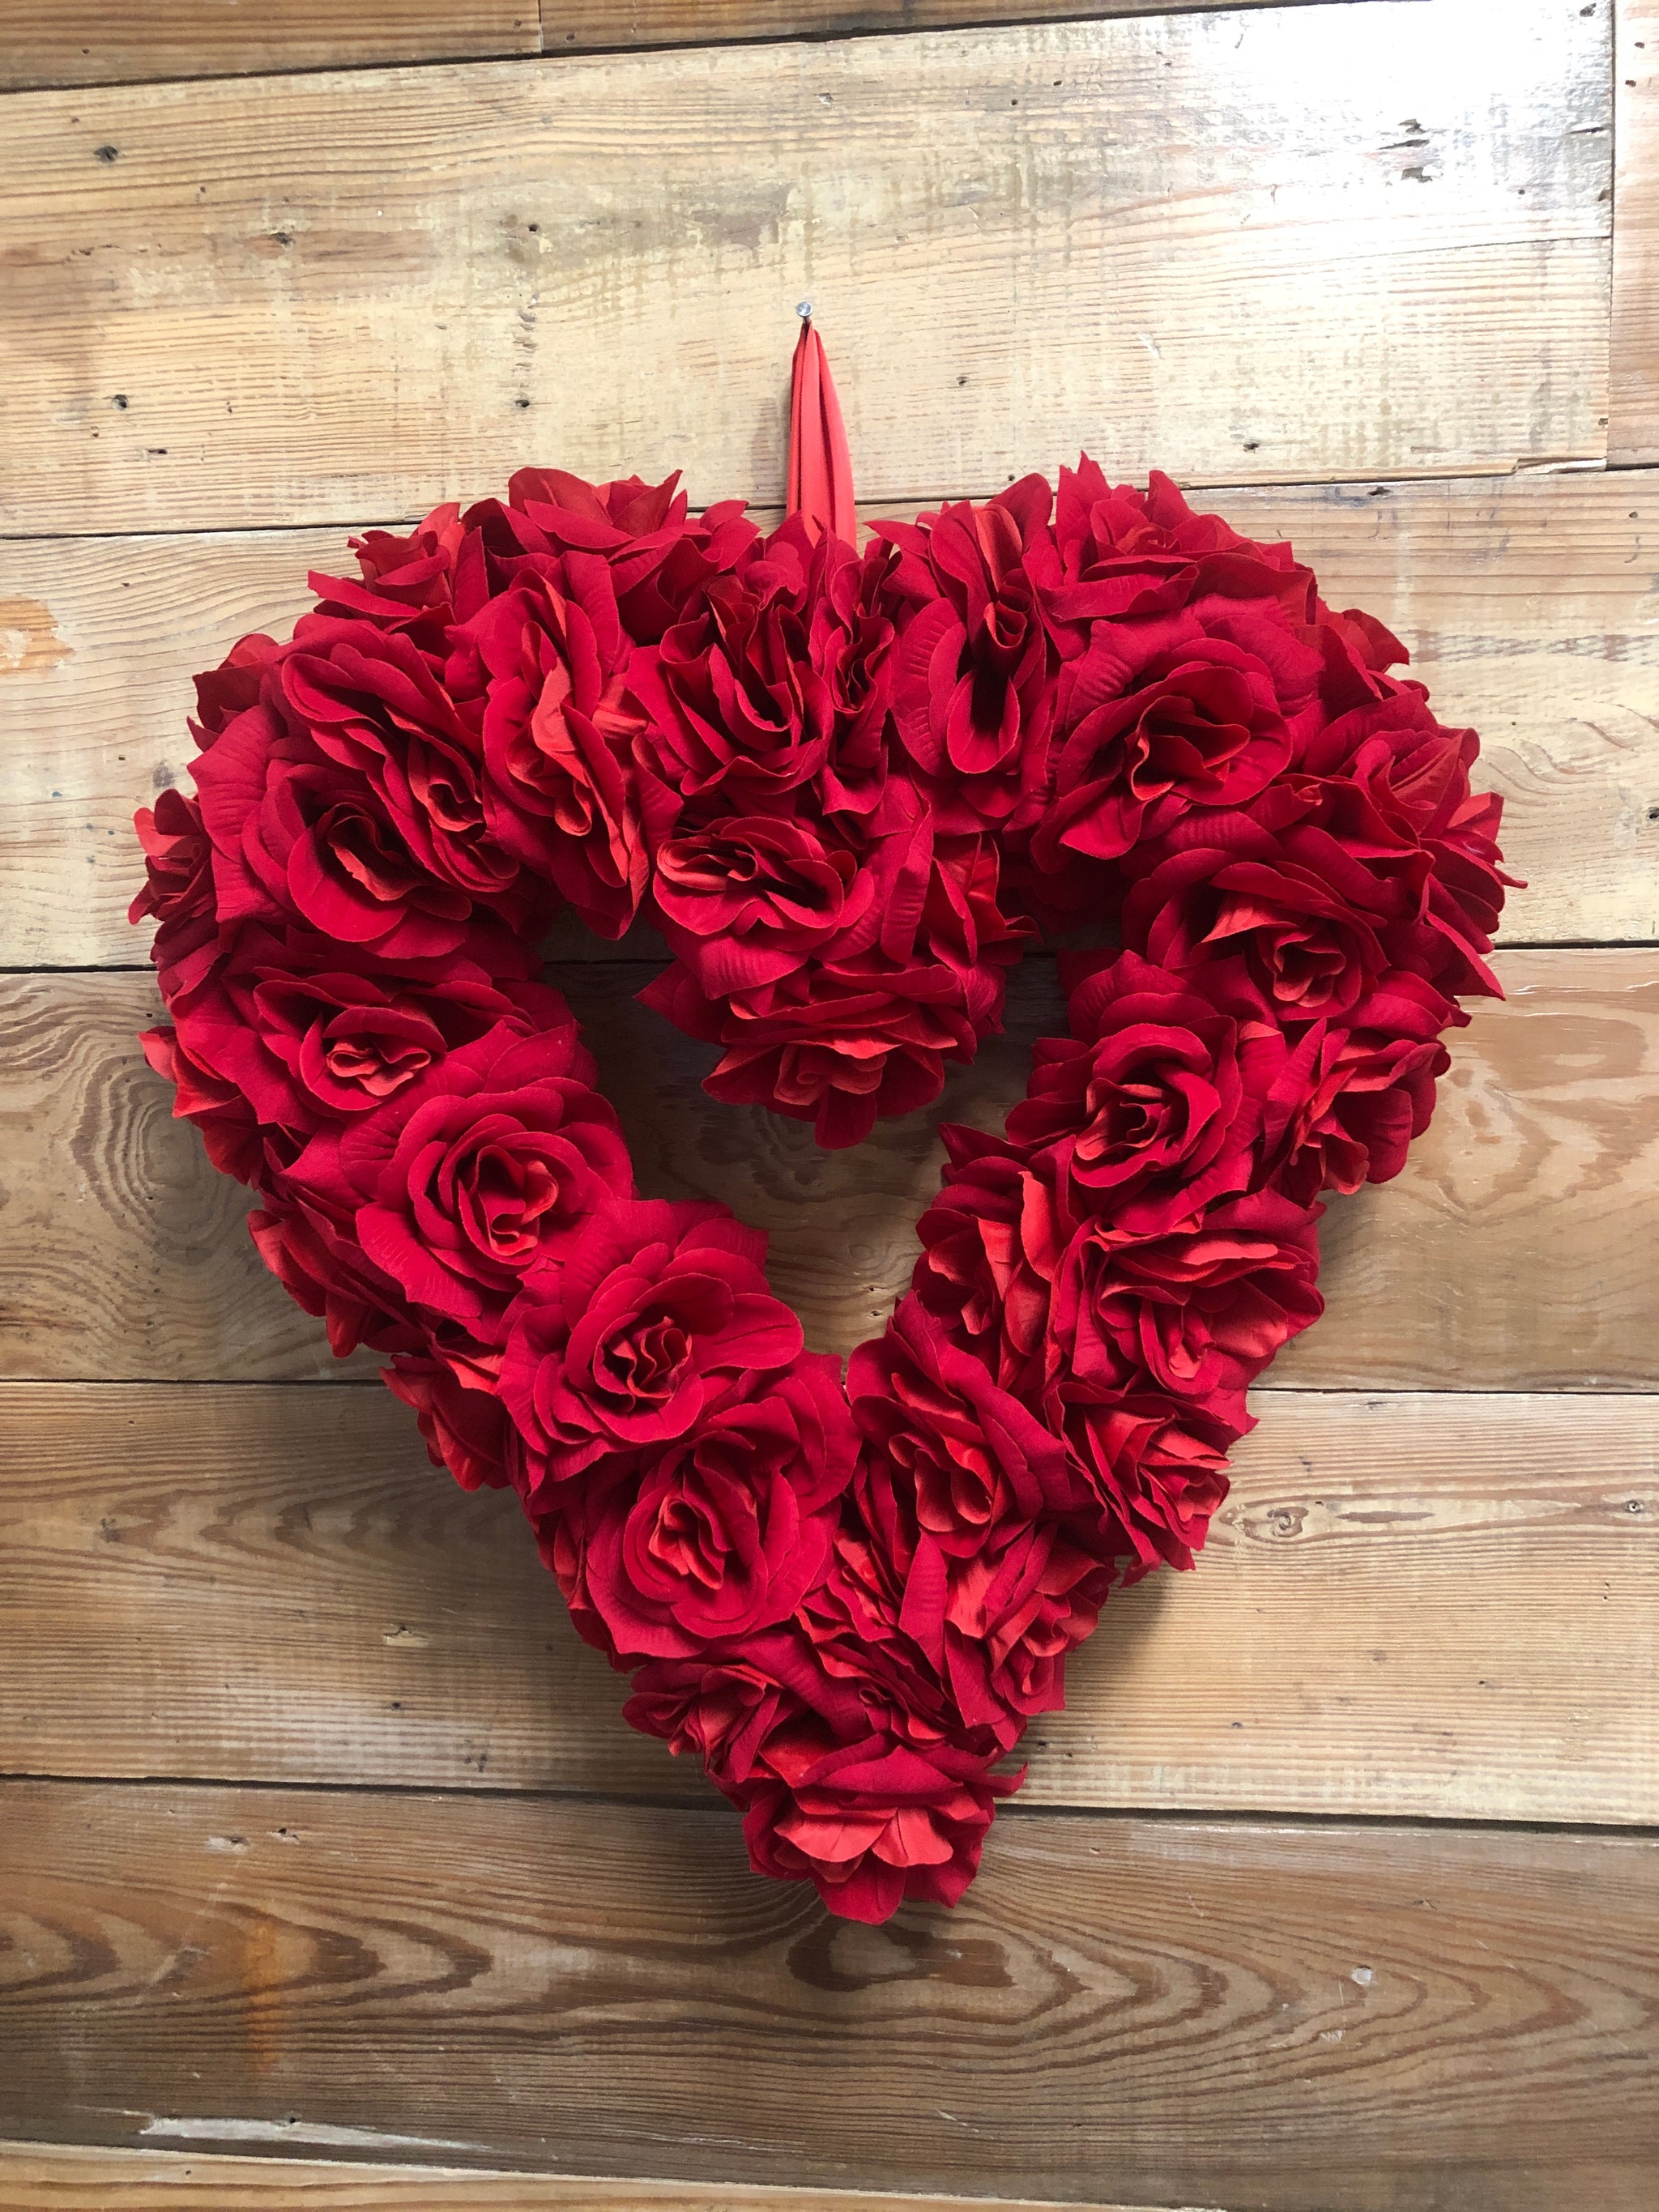 Sweetheart Valentine's Day Wreath 